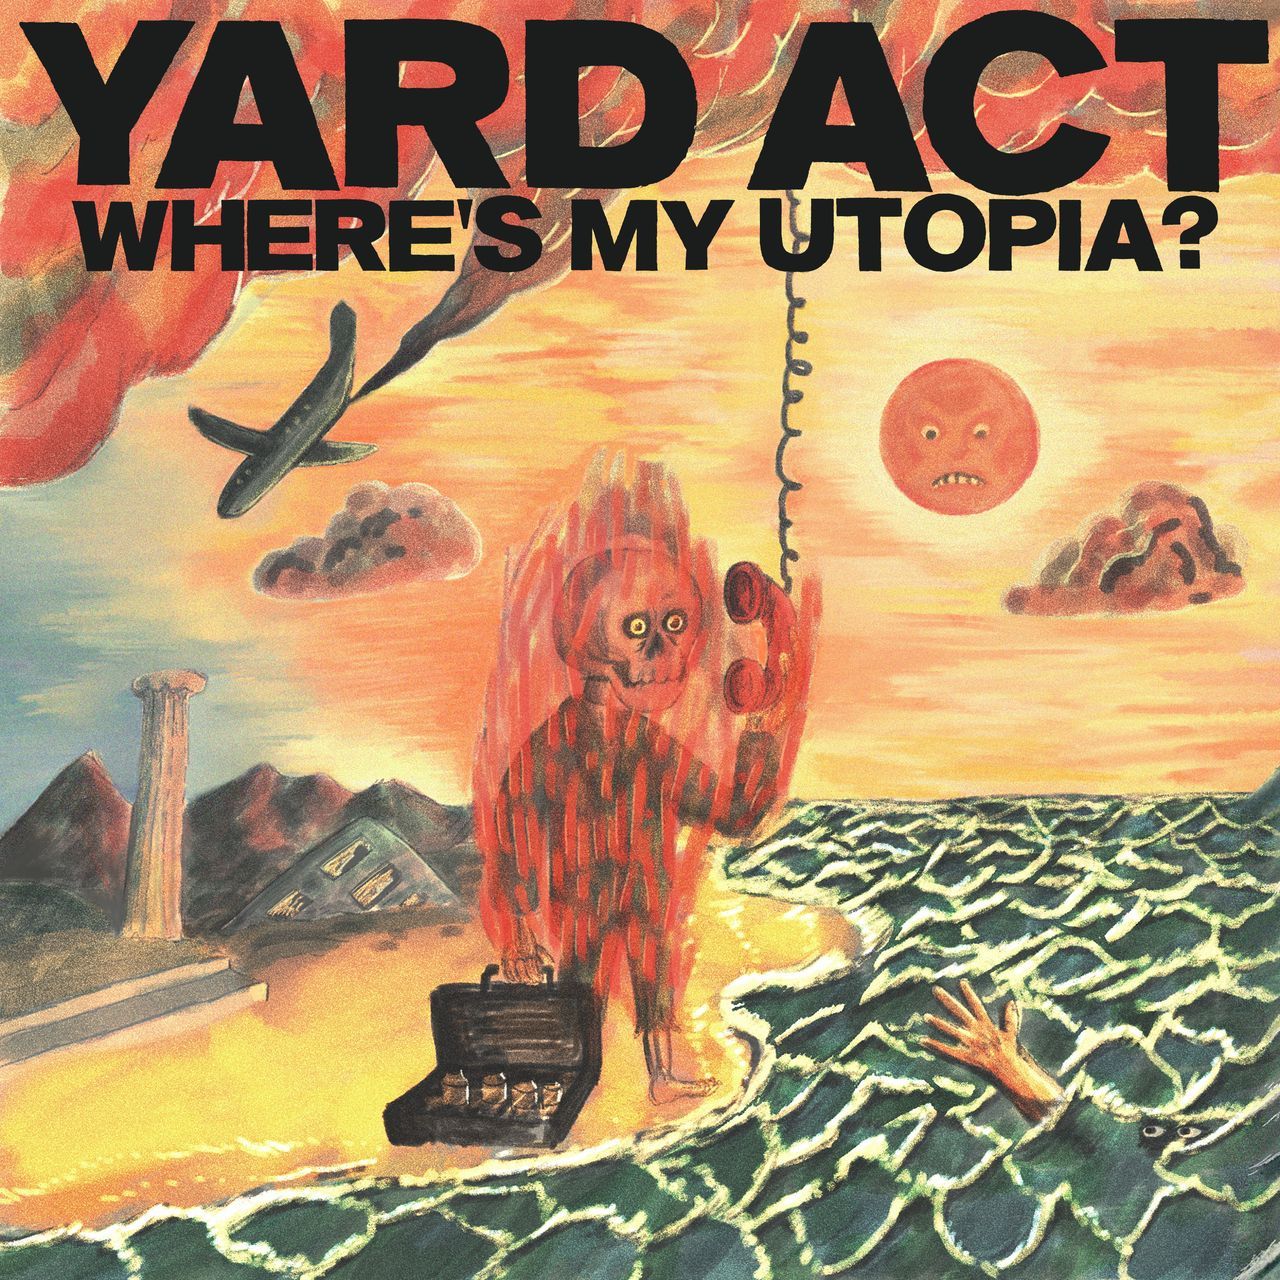 Where’s My Utopia? album art